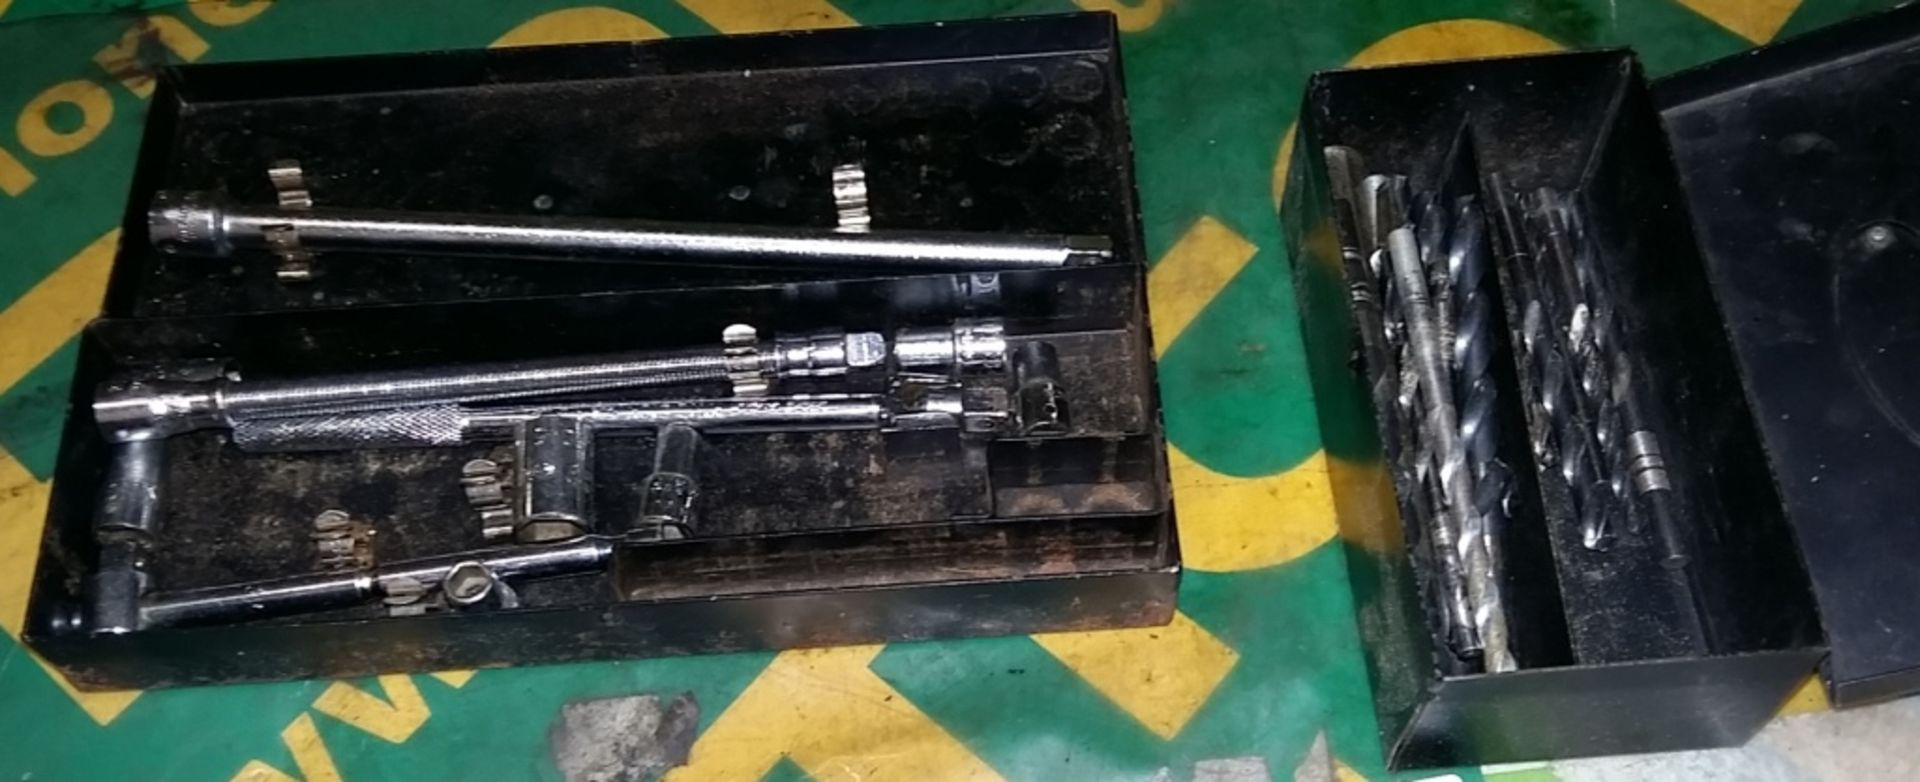 Flexible socket wrench, drill bits